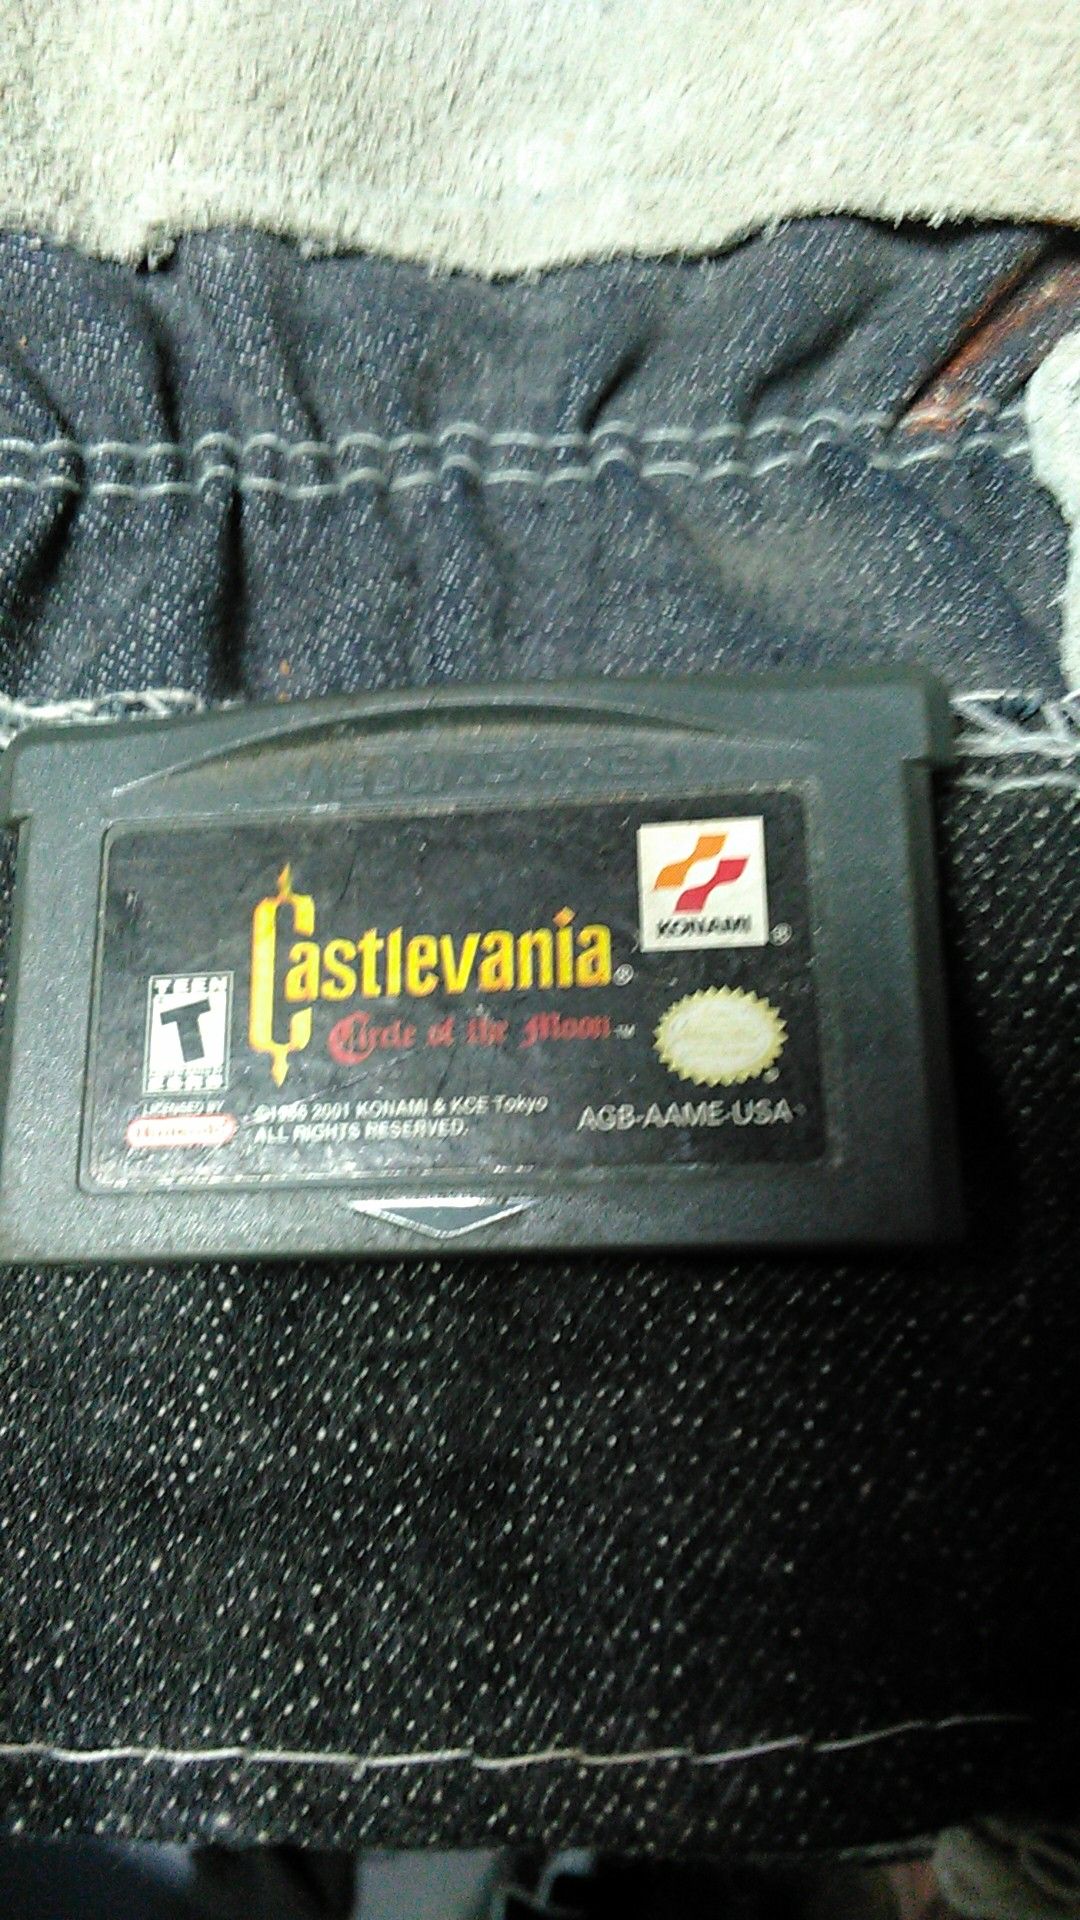 castlevania for gameboy